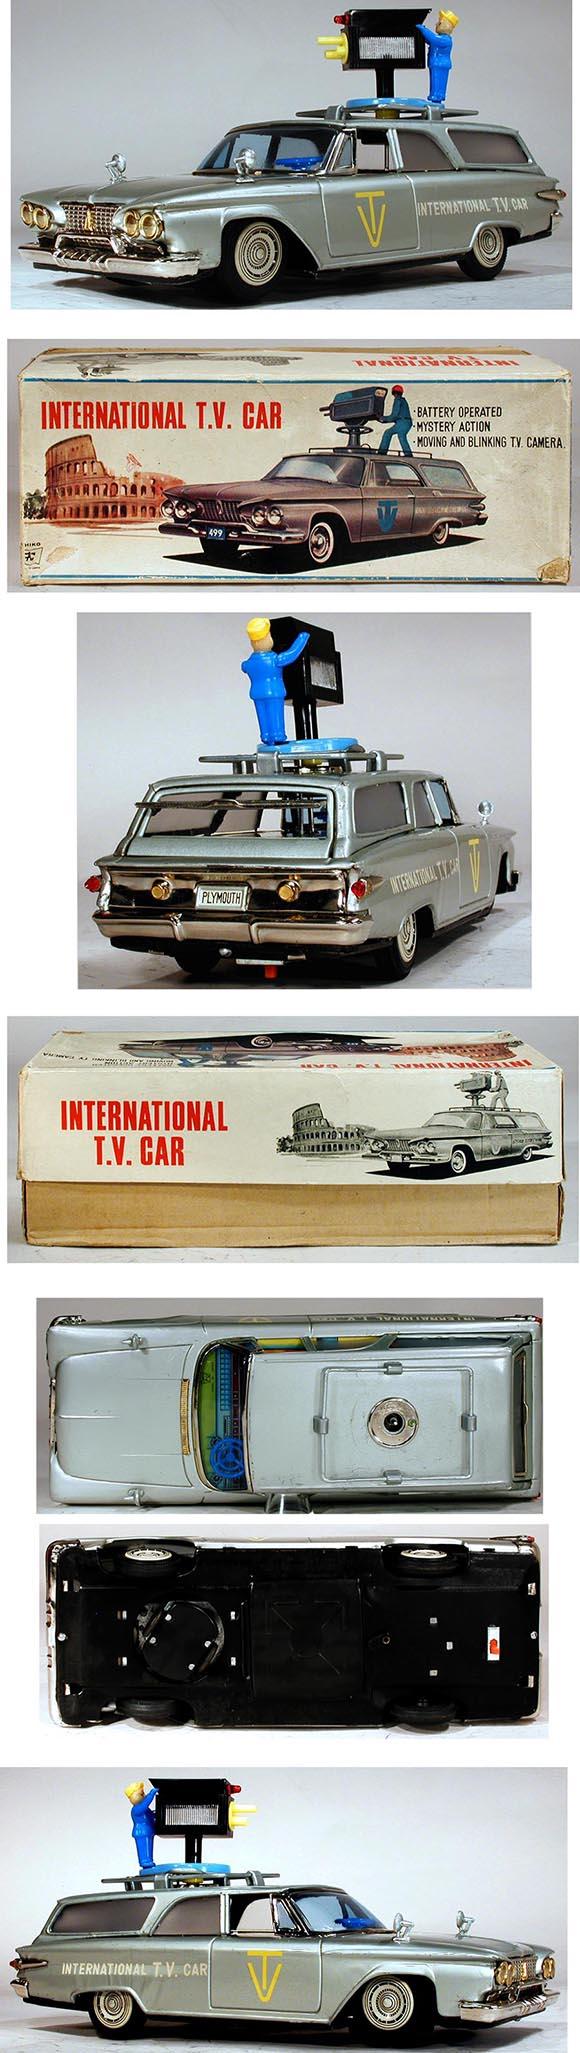 1961 Ichiko, Plymouth International T.V. Car in Original Box